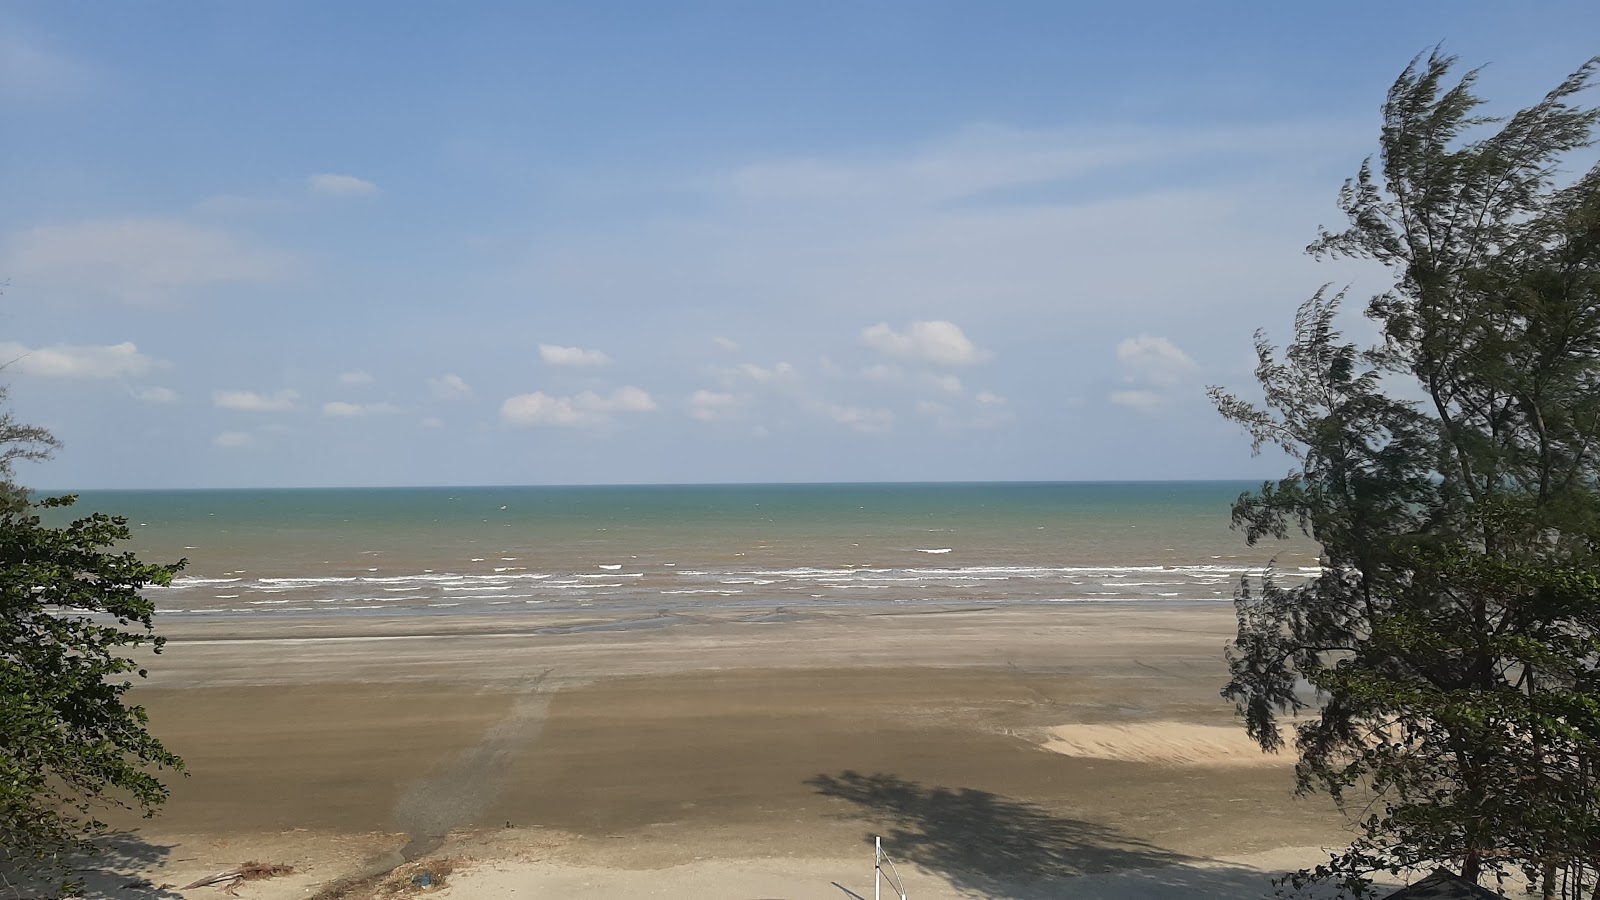 Foto de Batu Hitam Mandurah Beach - lugar popular entre los conocedores del relax